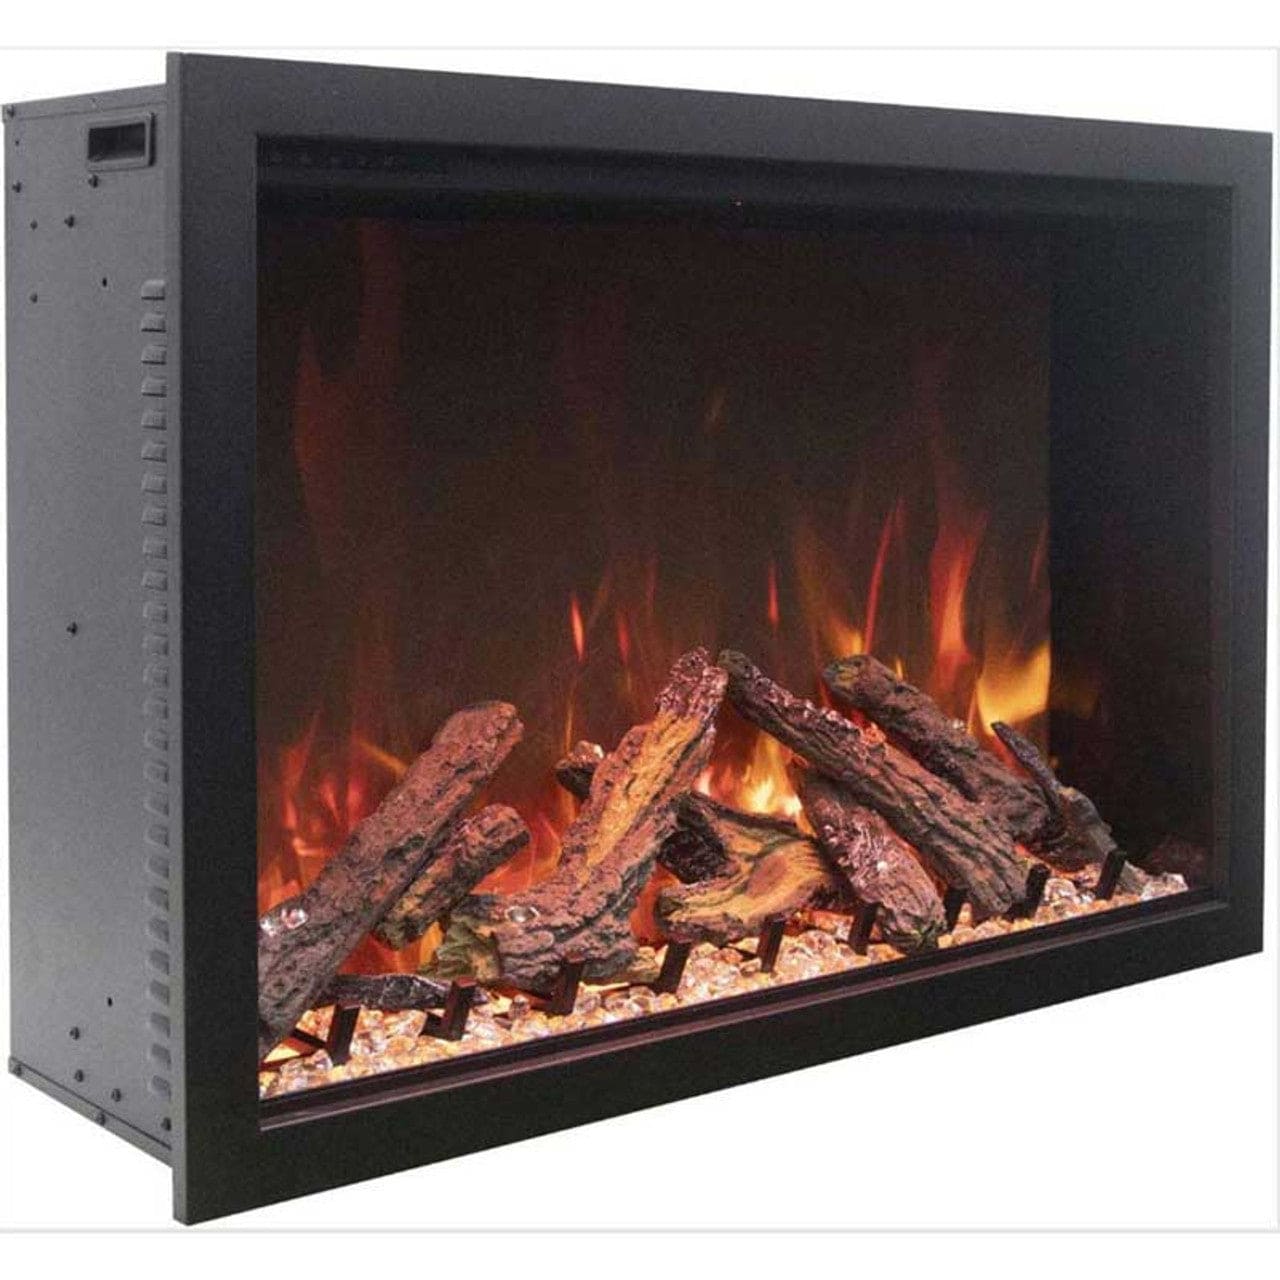 Amantii TRD 33" Smart Electric Fireplace Insert - TRD-33 - Chimney Cricket